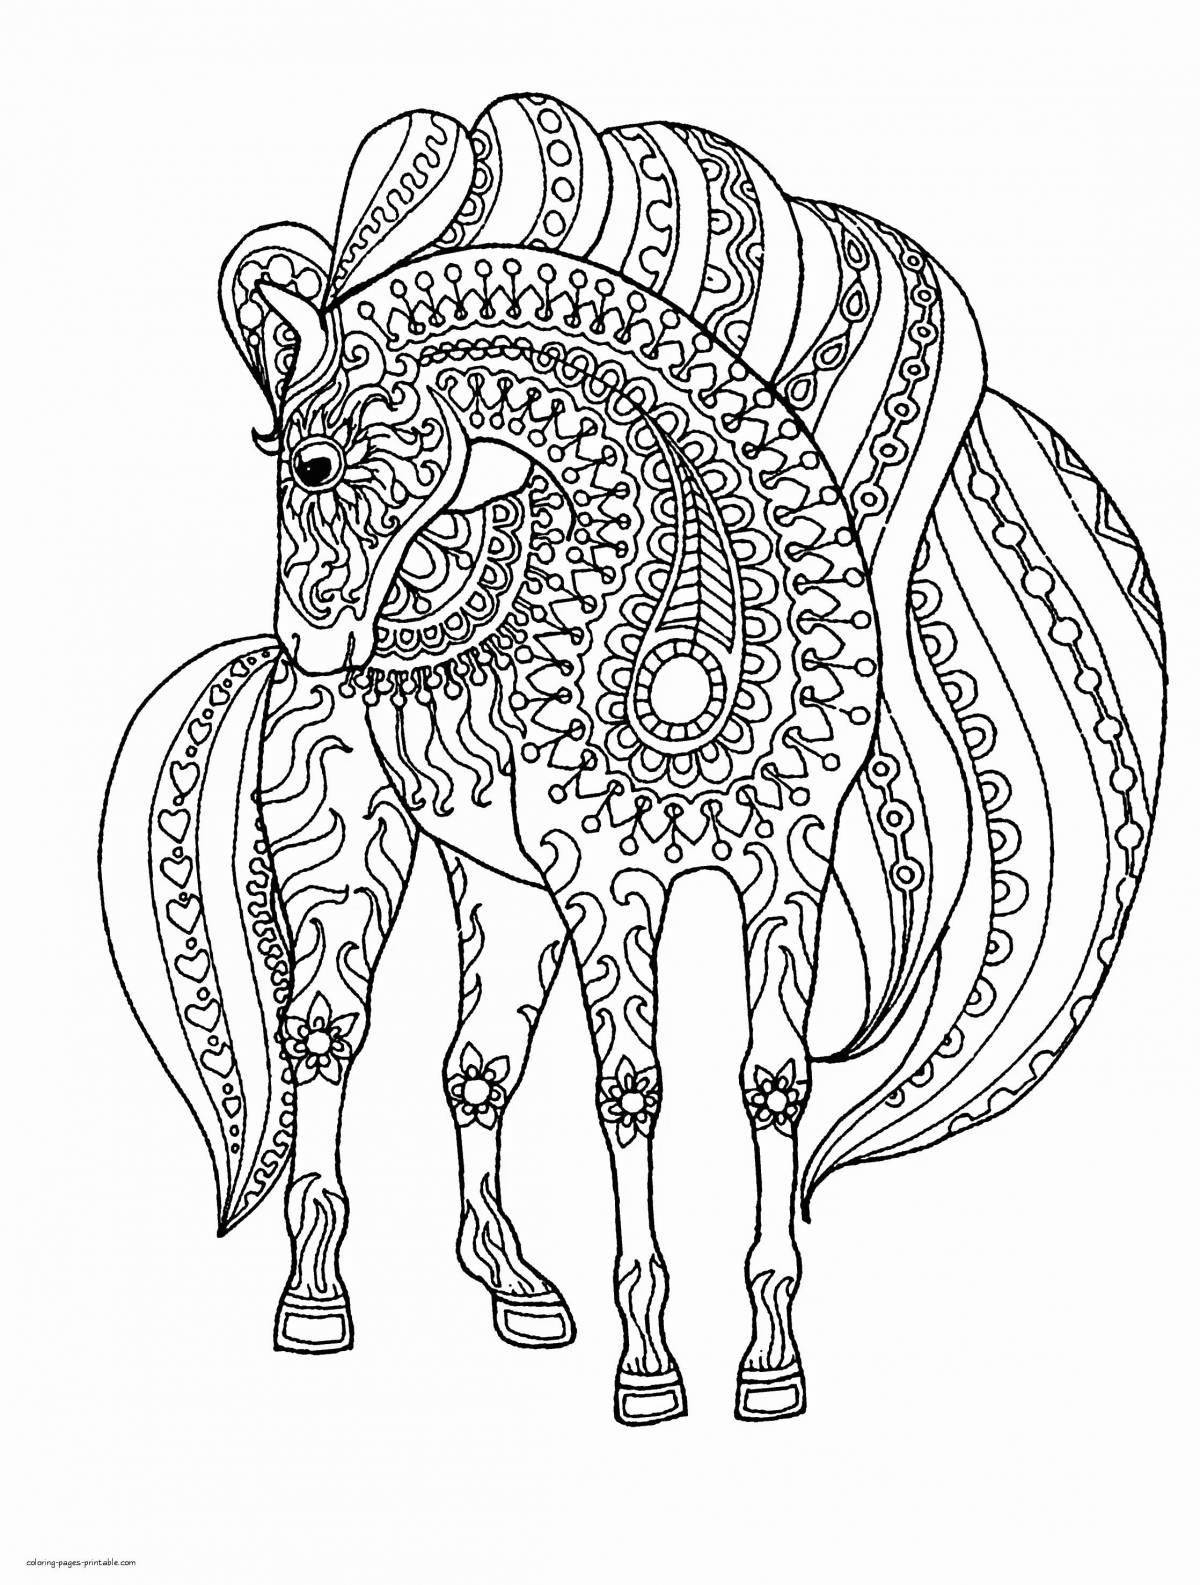 Creative animal mandala coloring page